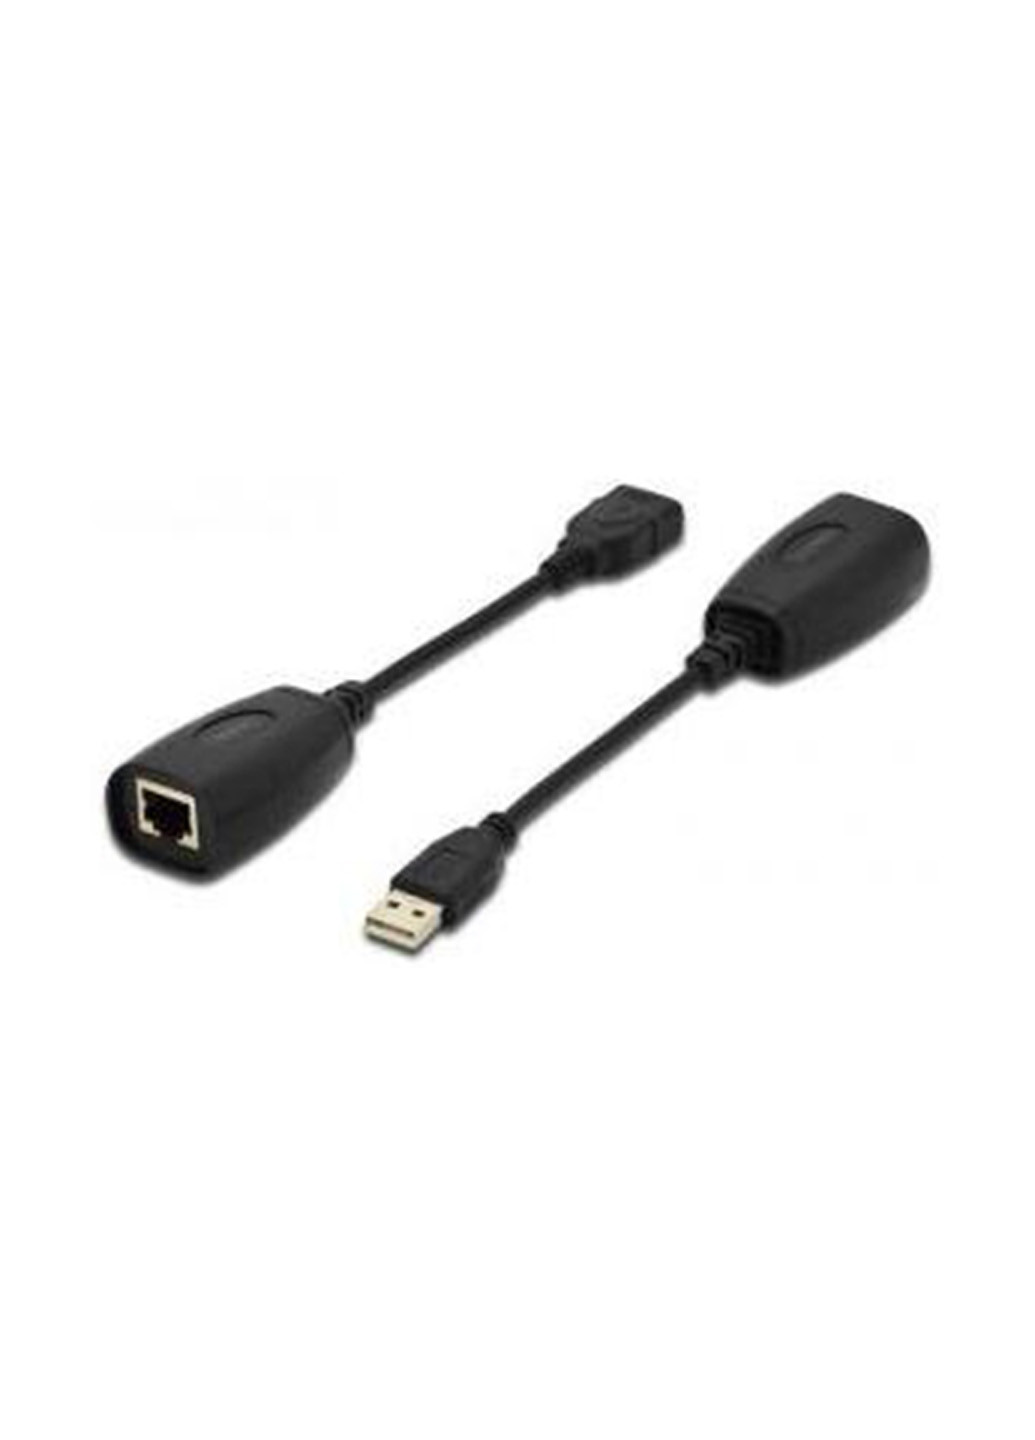 Удленнітель USB - UTP Cat5, black (DA-70139-2) Digitus удленнитель usb - utp cat5, black (da-70139-2) (136464021)